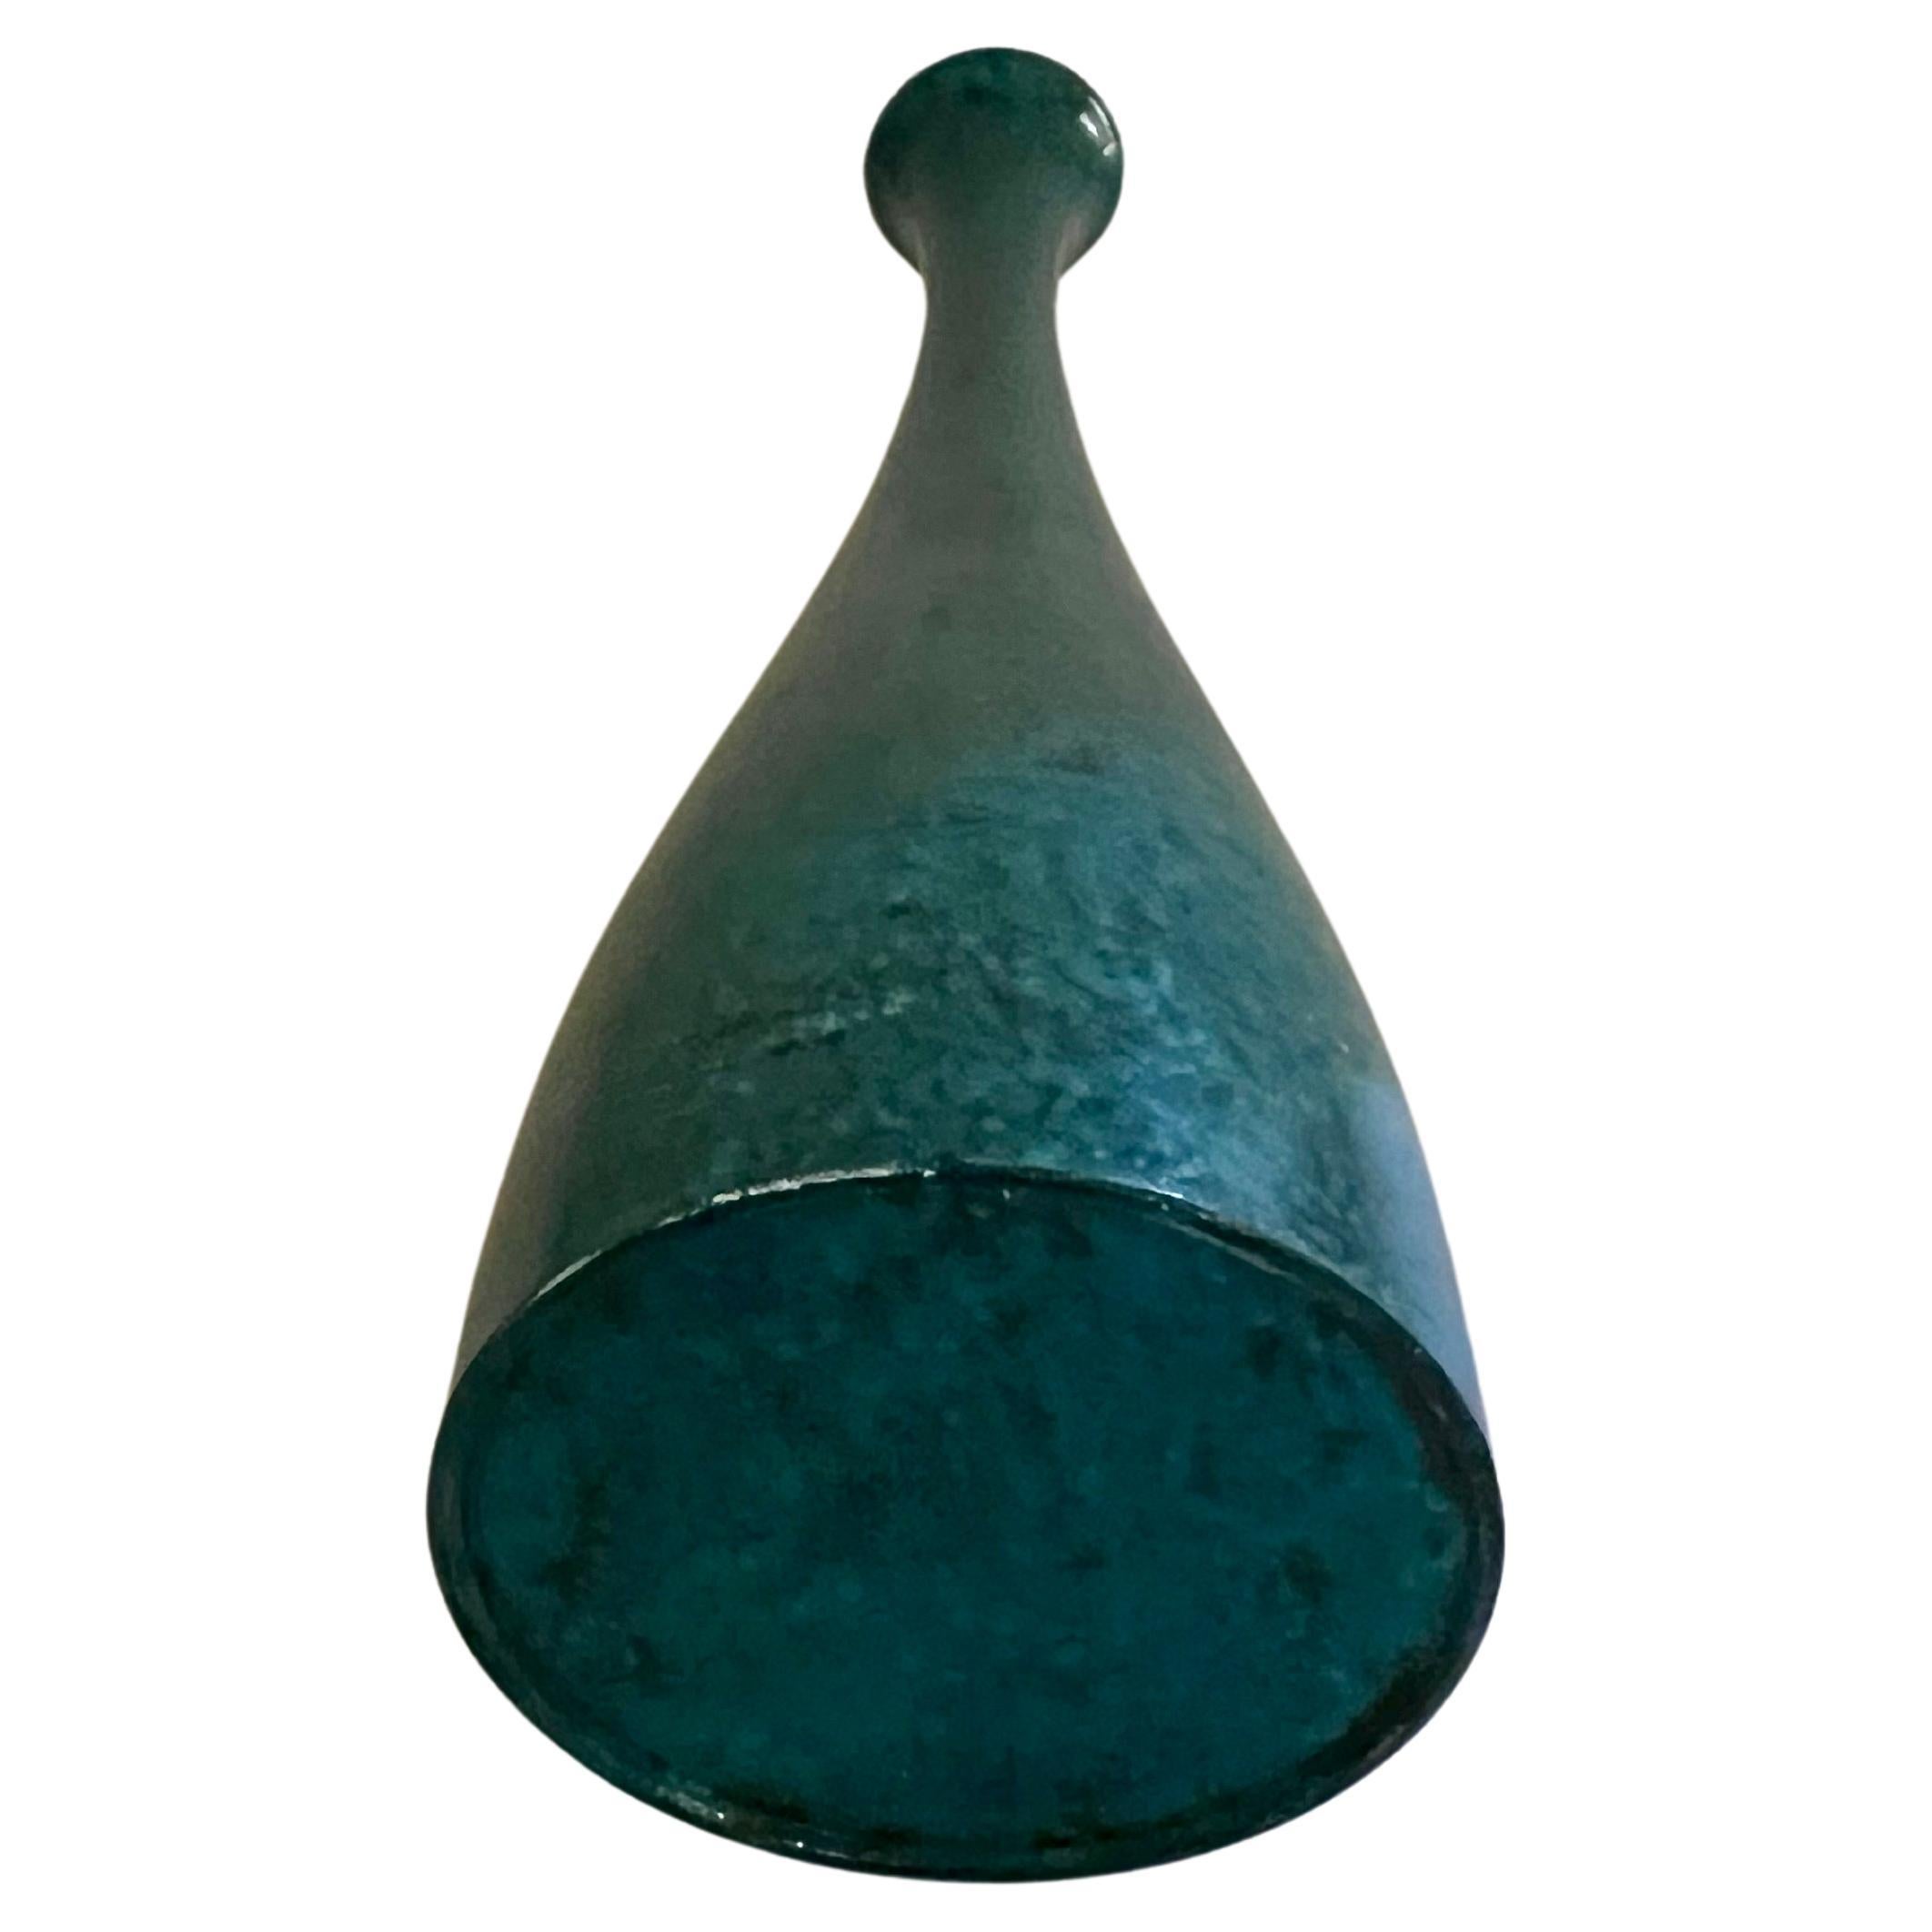 Elegant patinated bronze finish bud Vase with simple design in metal.